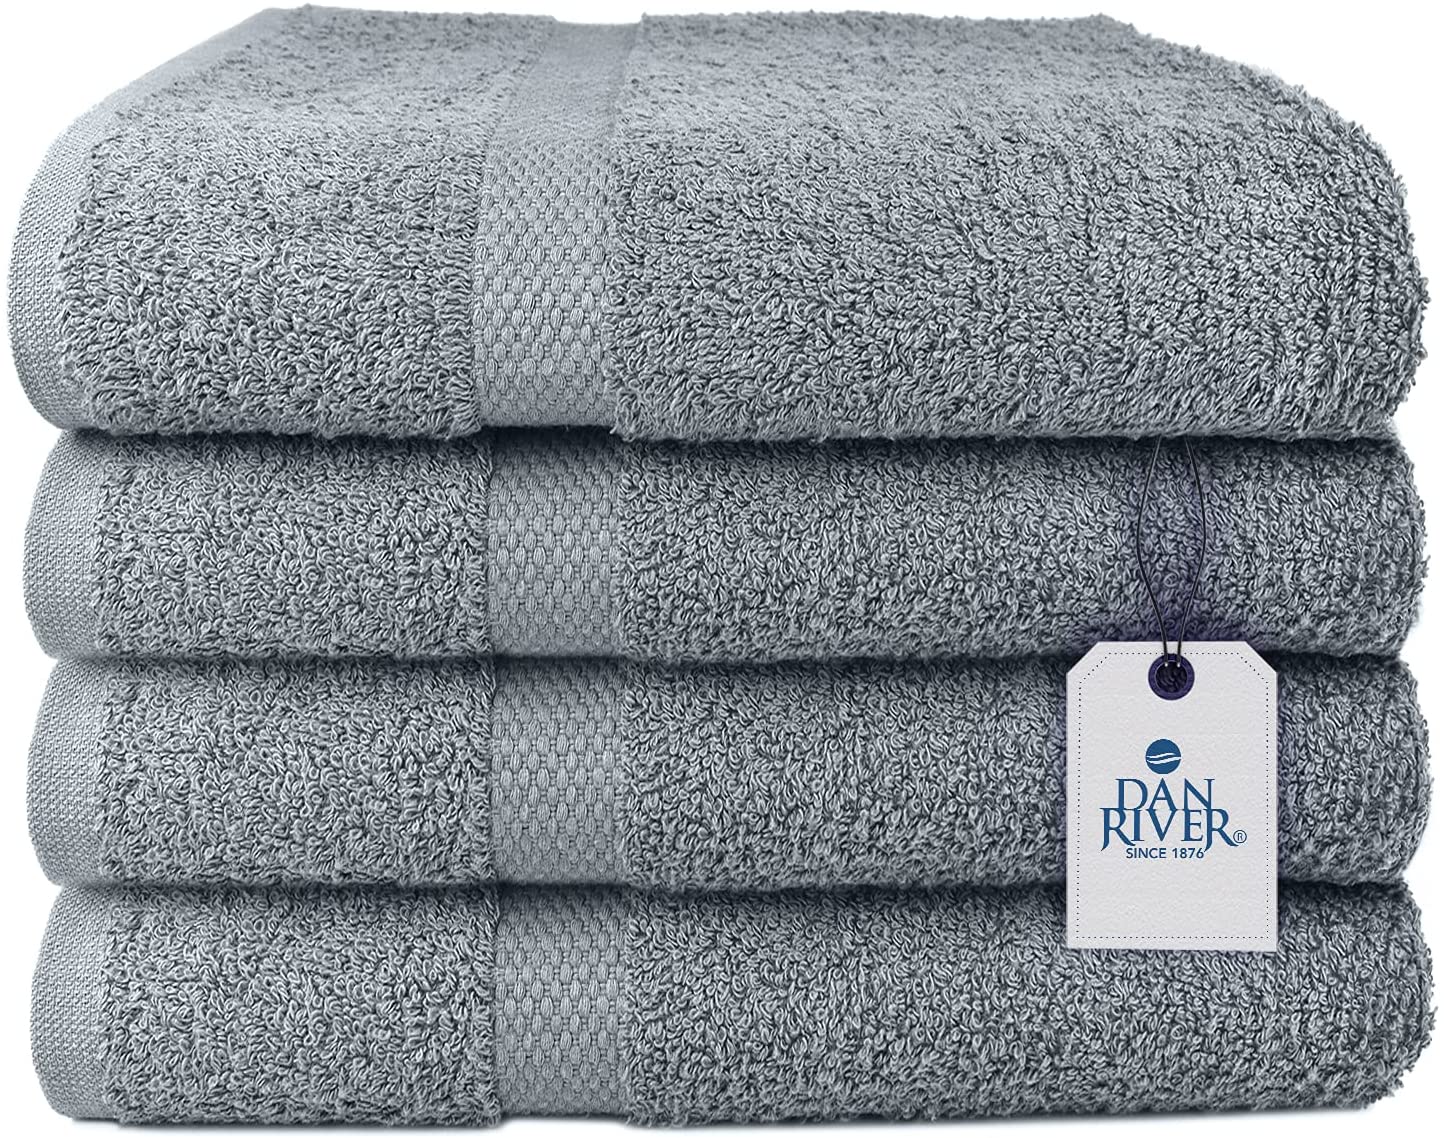 https://www.dontwasteyourmoney.com/wp-content/uploads/2021/06/dan-river-100-cotton-terry-bath-towel-set-4-pack.jpg